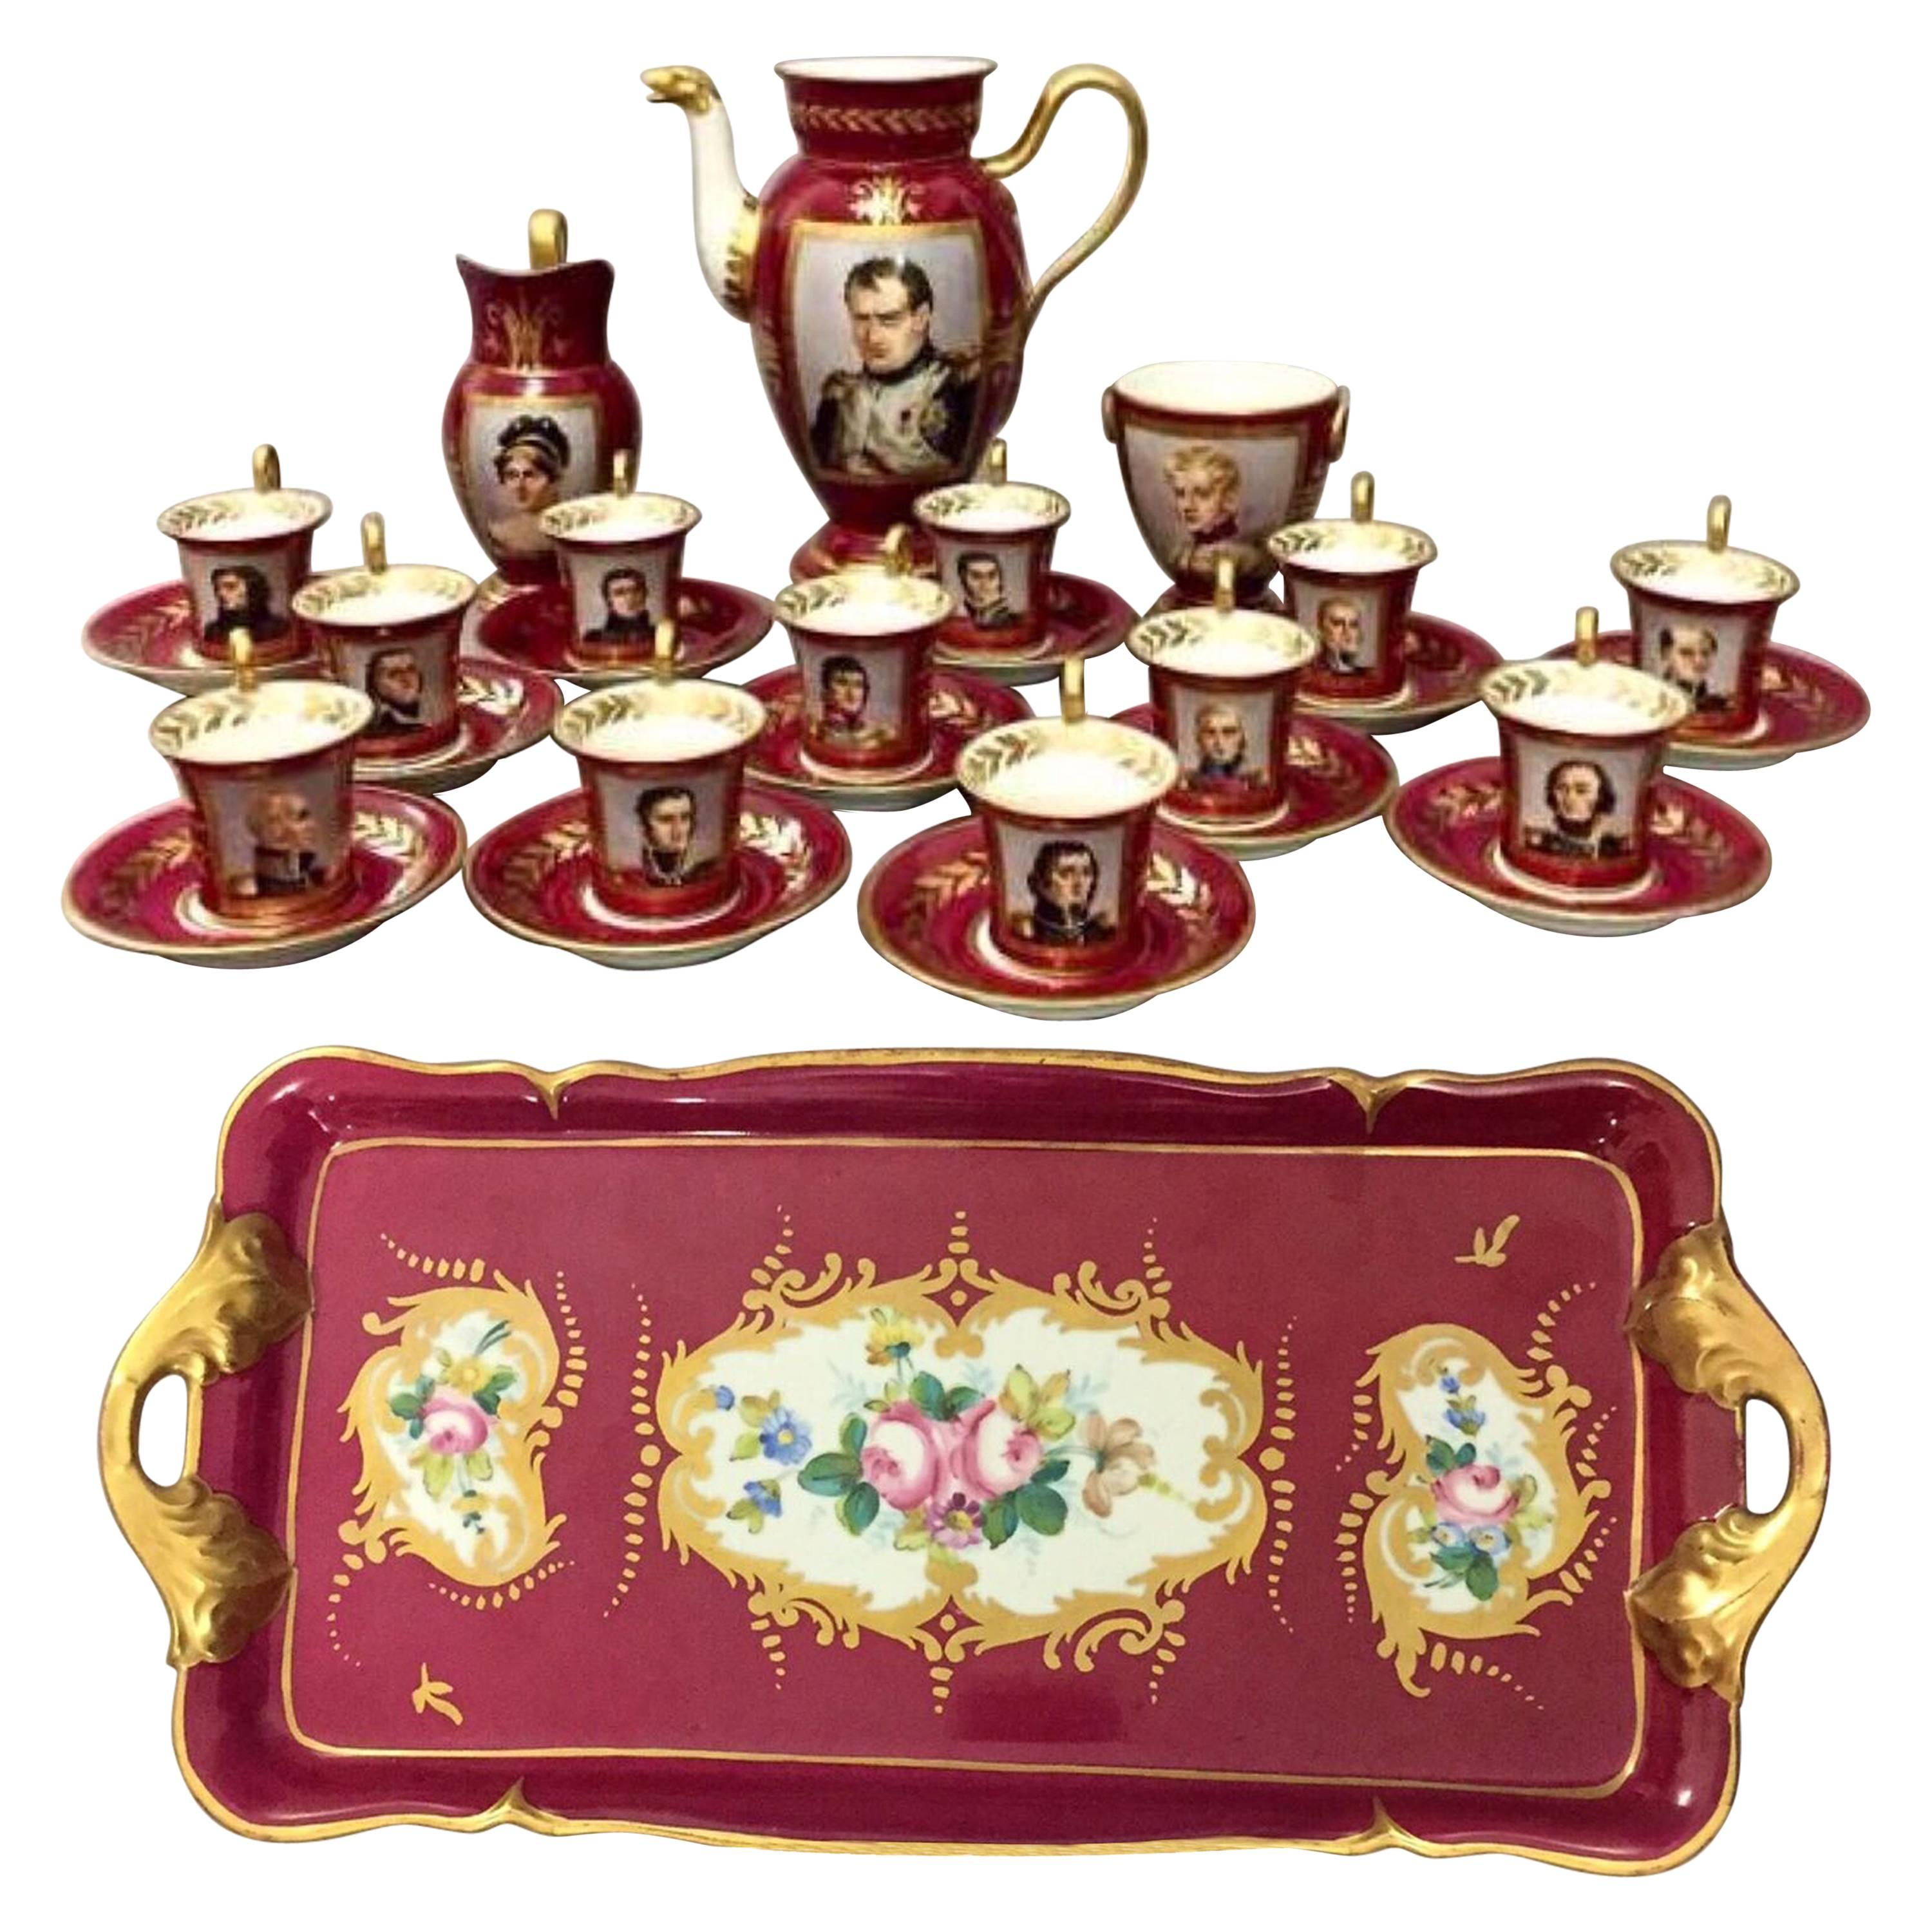 19th Century, Paris Porcelain Tea Set Featuring Napoleonic Portraits with Tray